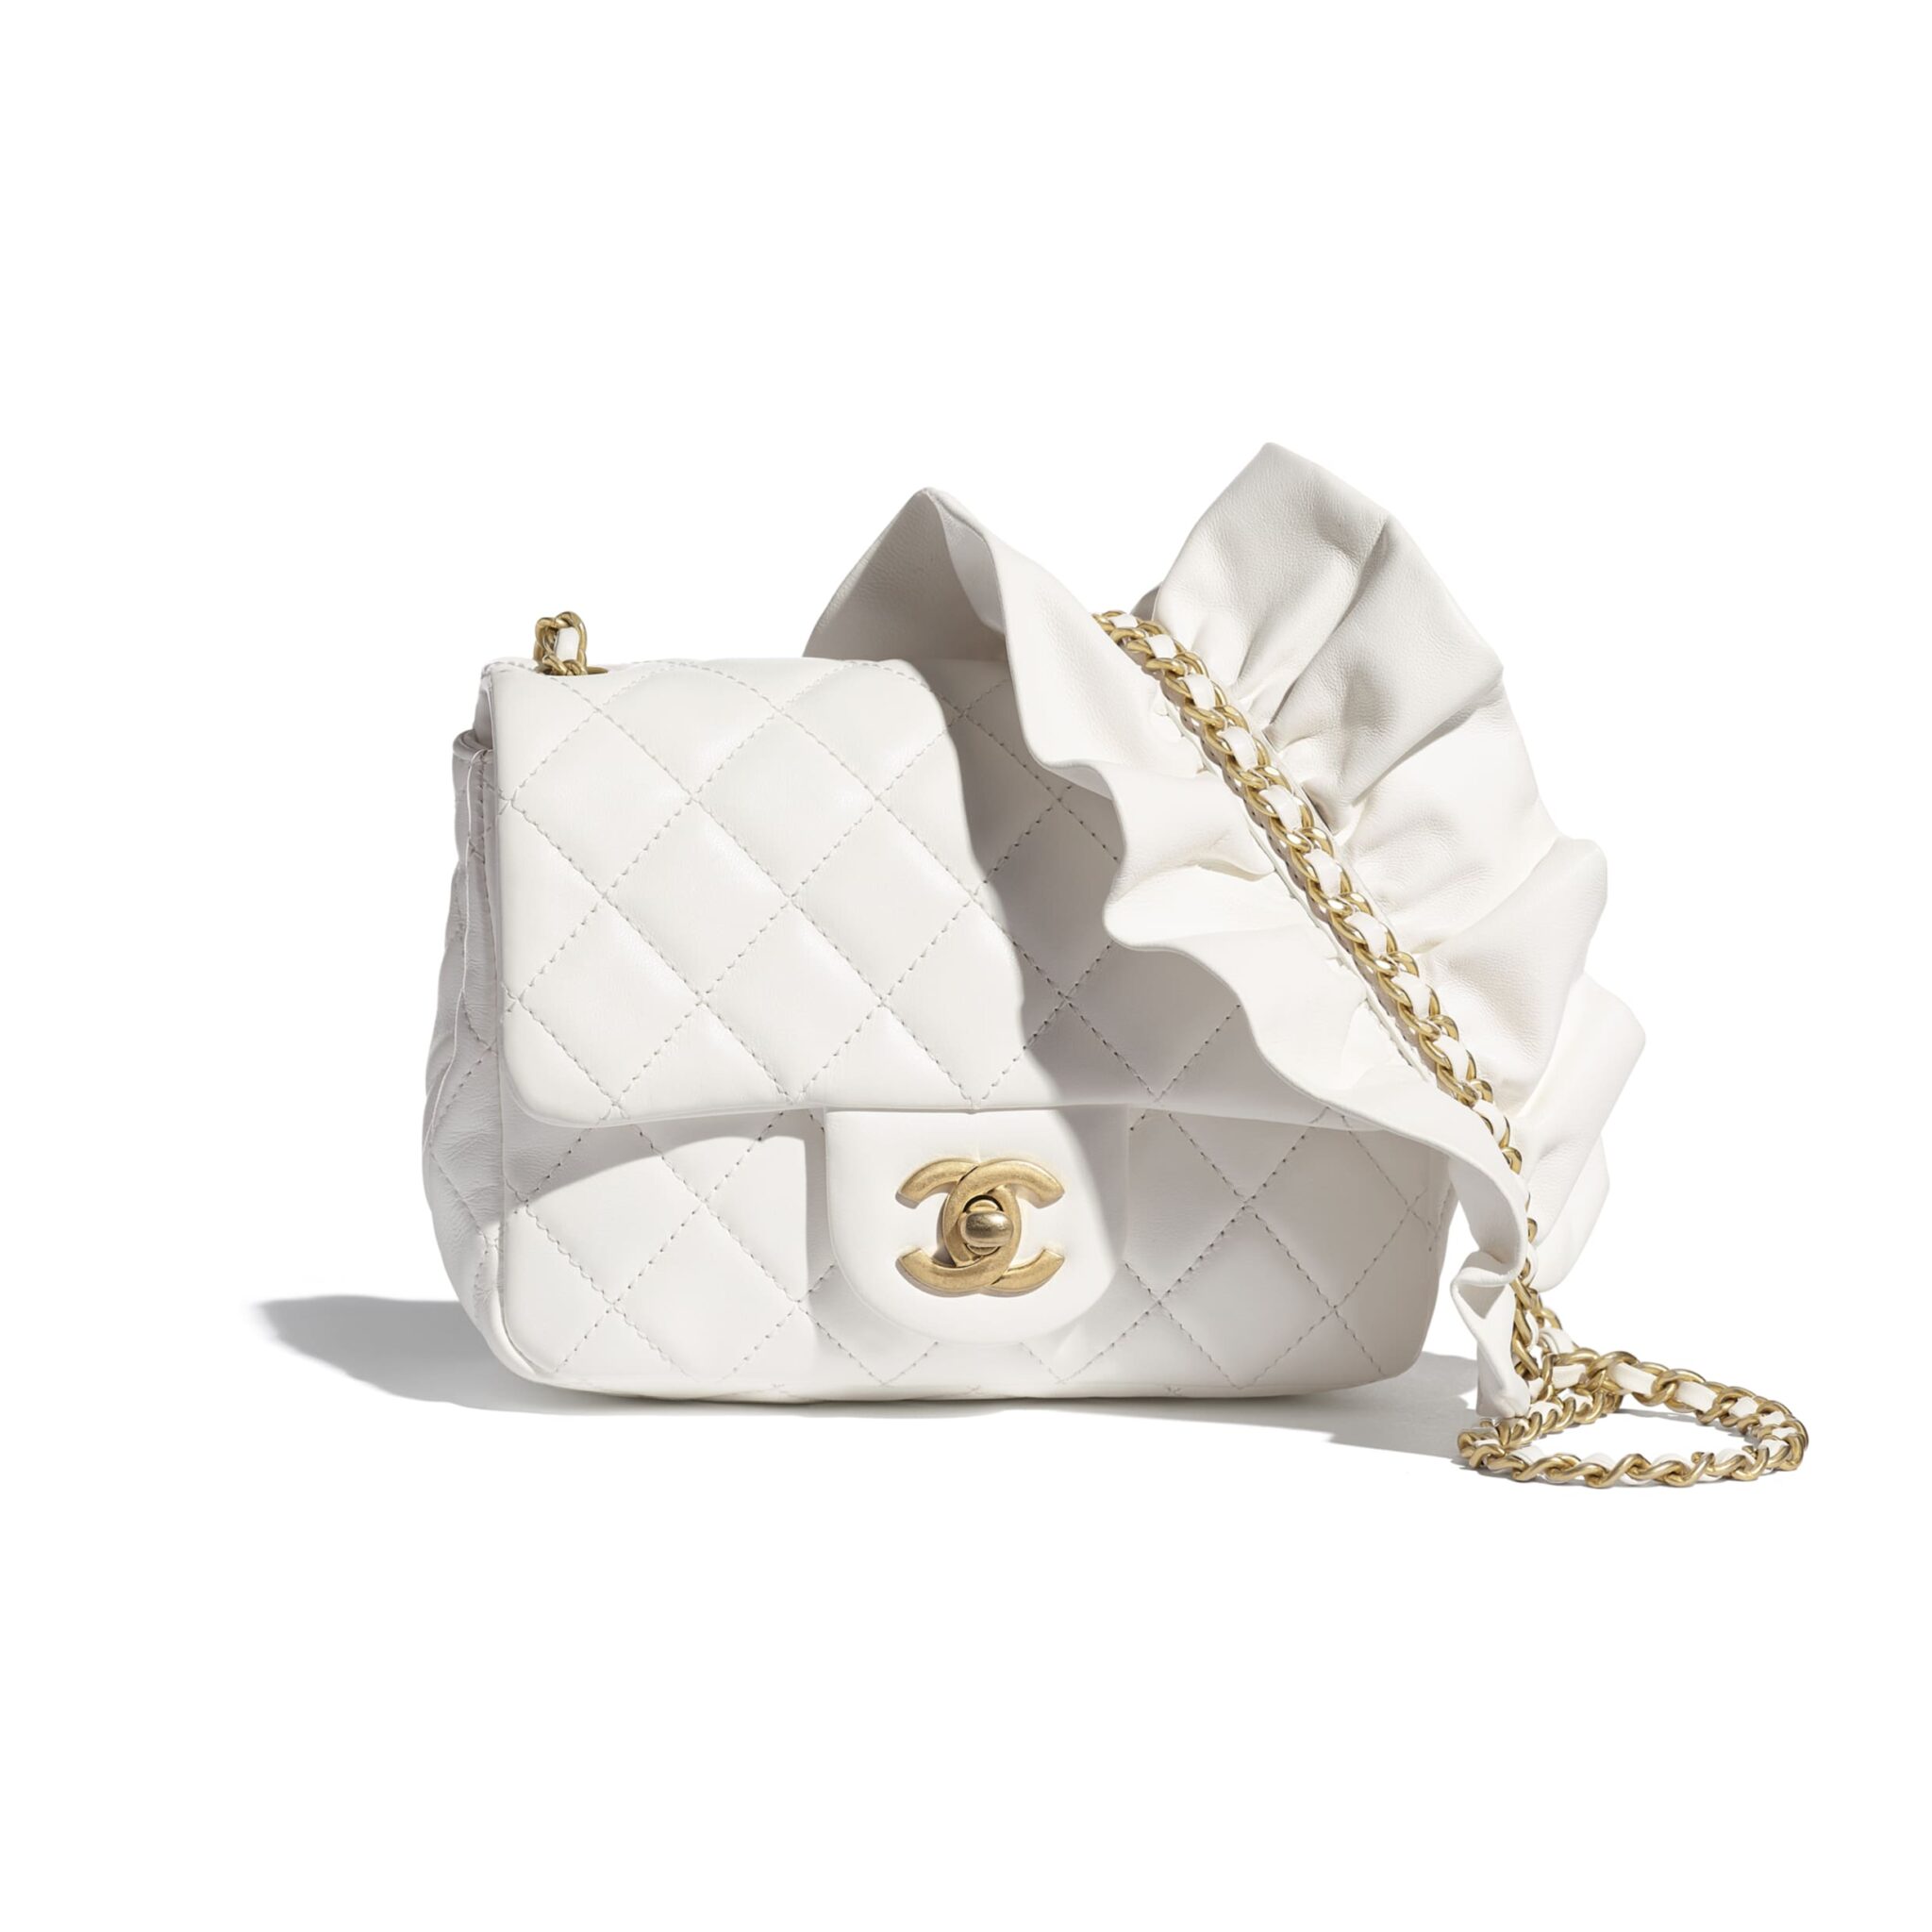 Chanel Woven Raffia Pink White Small CC Shoulder Flap Bag